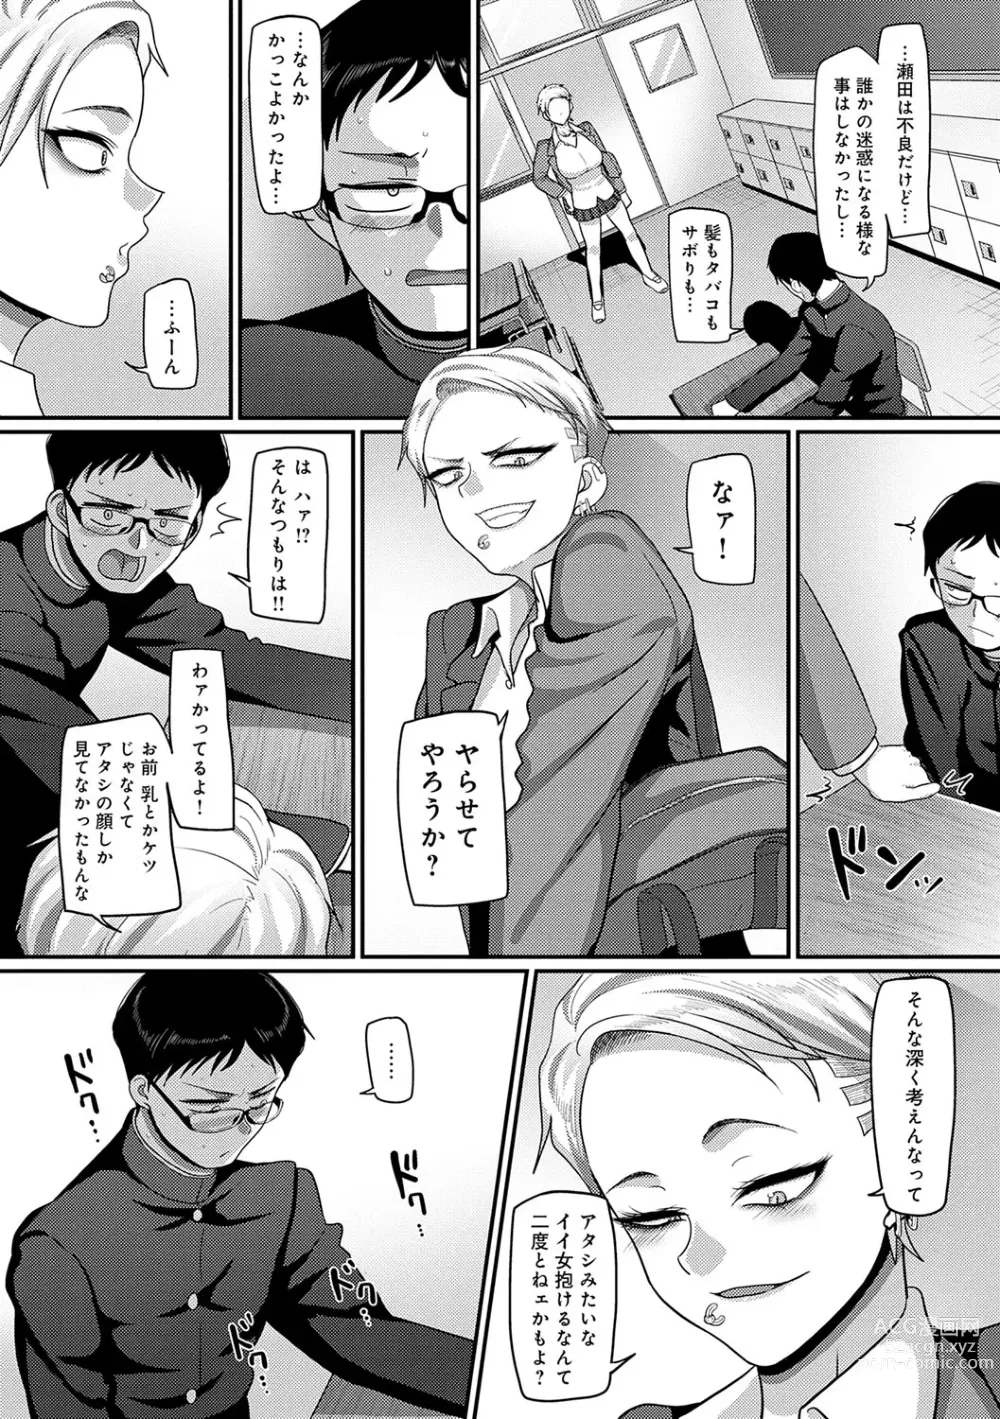 Page 7 of manga Nani Miten da yo! - What are you looking at?